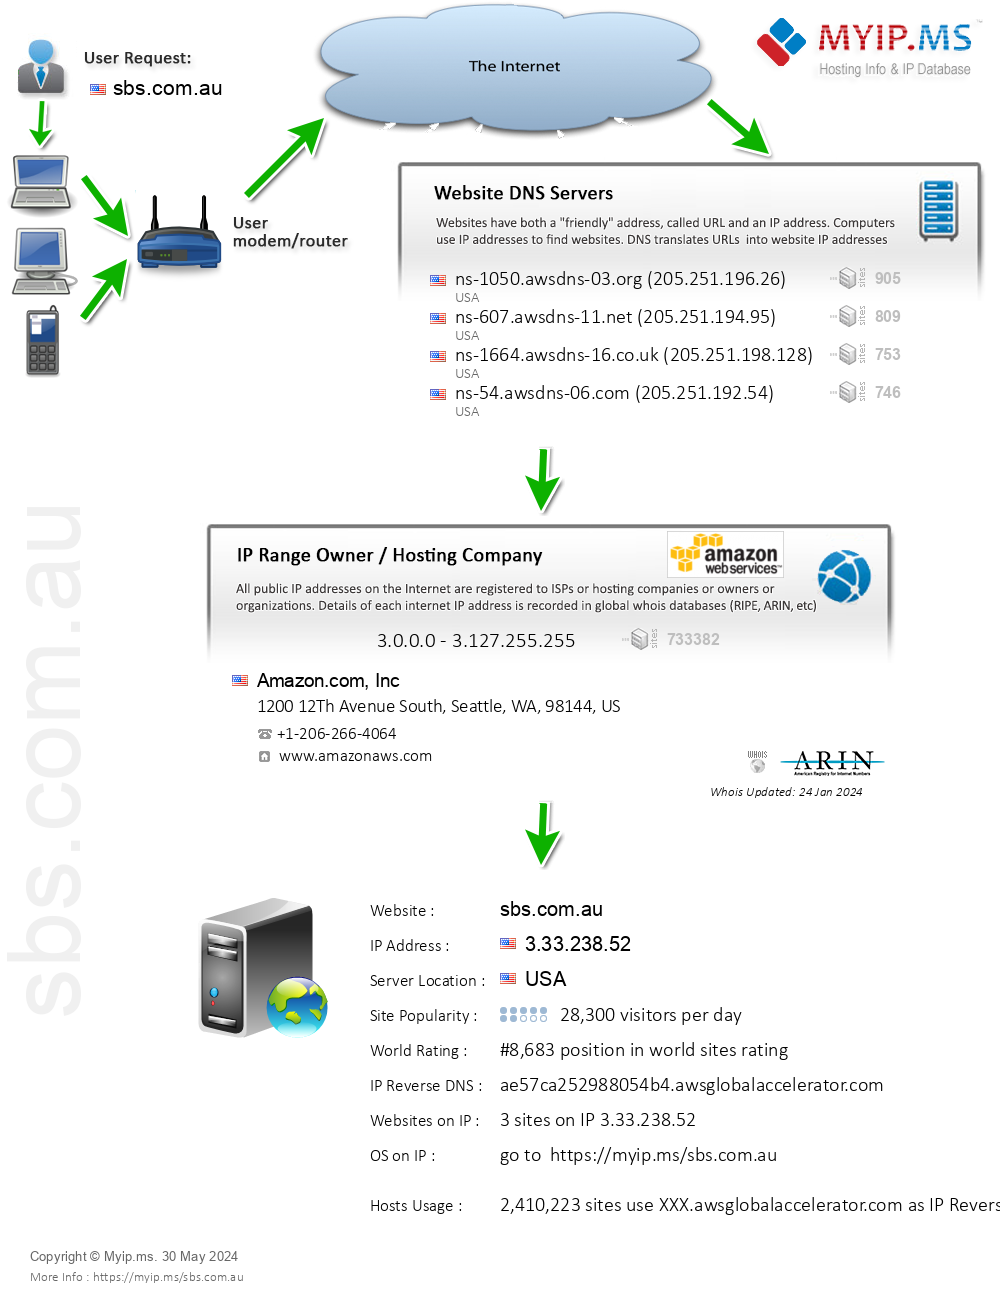 Sbs.com.au - Website Hosting Visual IP Diagram